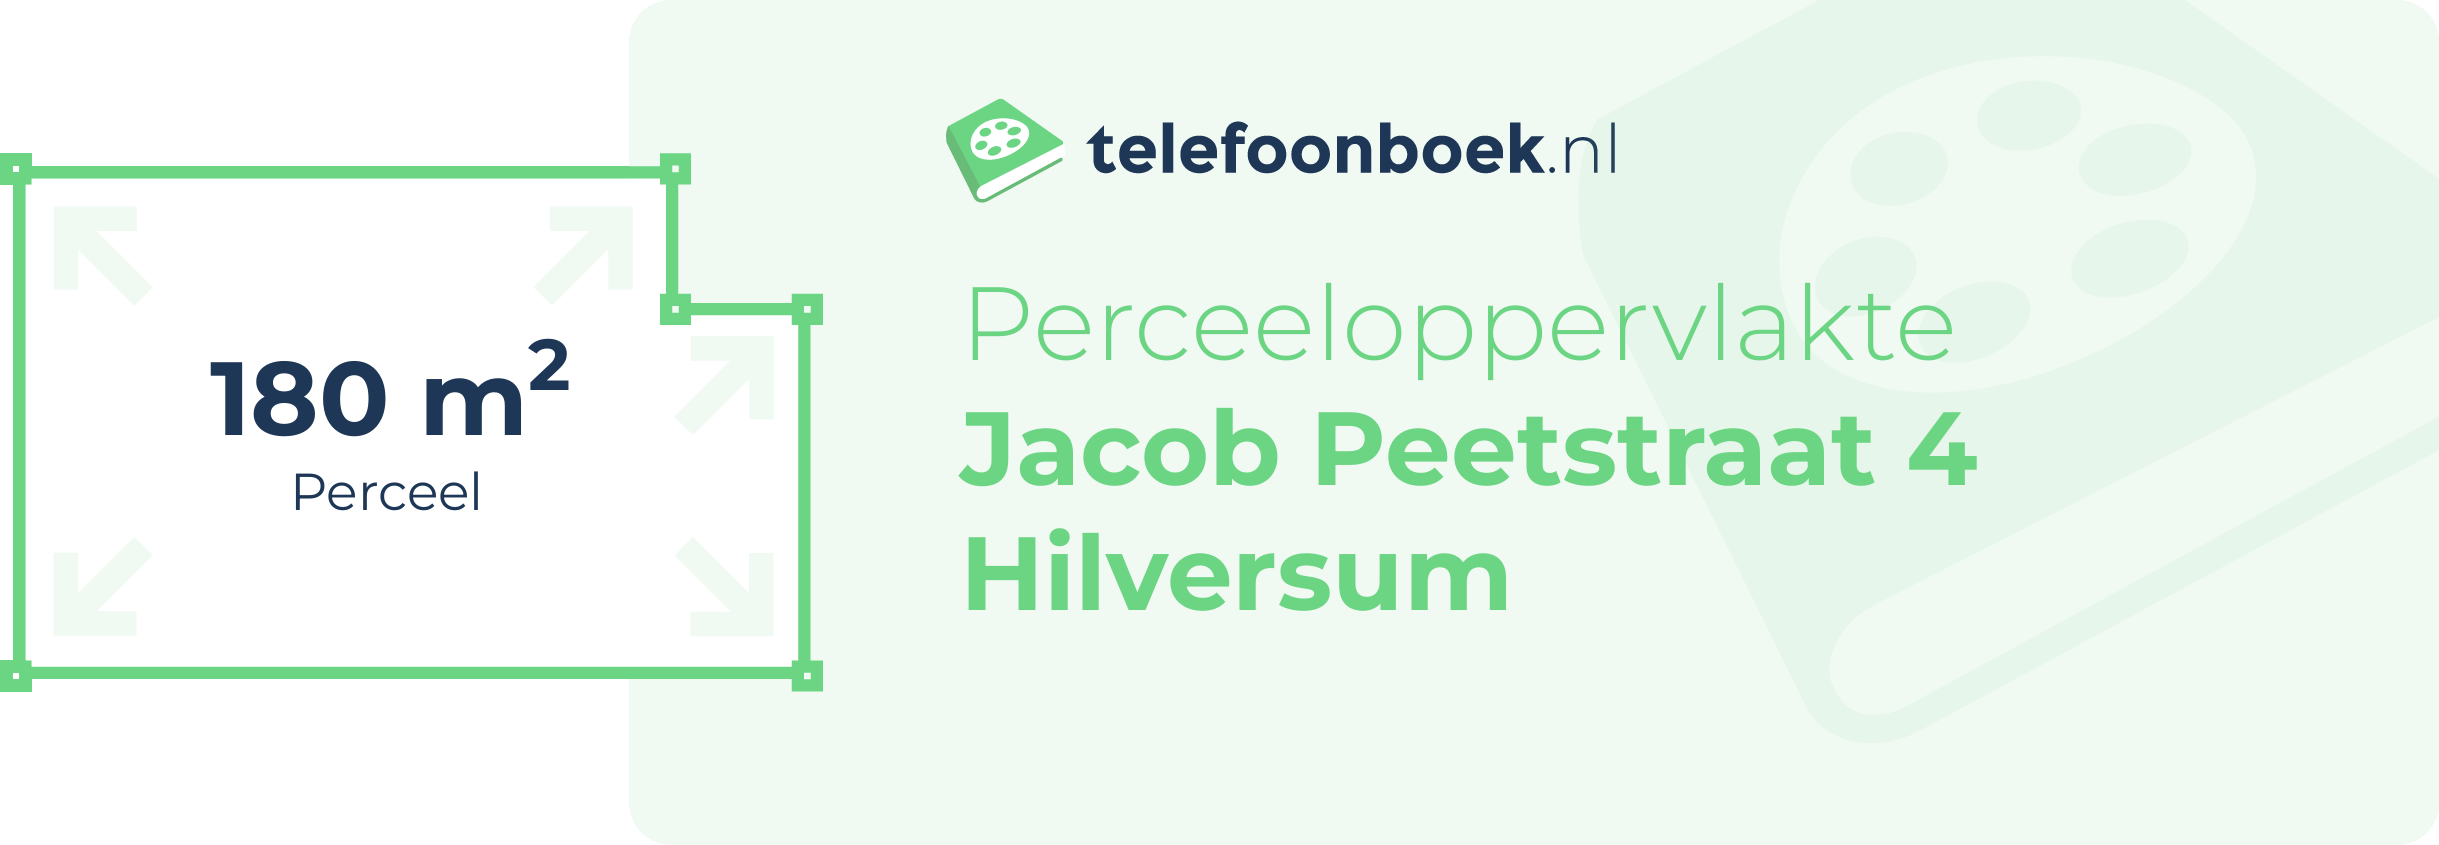 Perceeloppervlakte Jacob Peetstraat 4 Hilversum